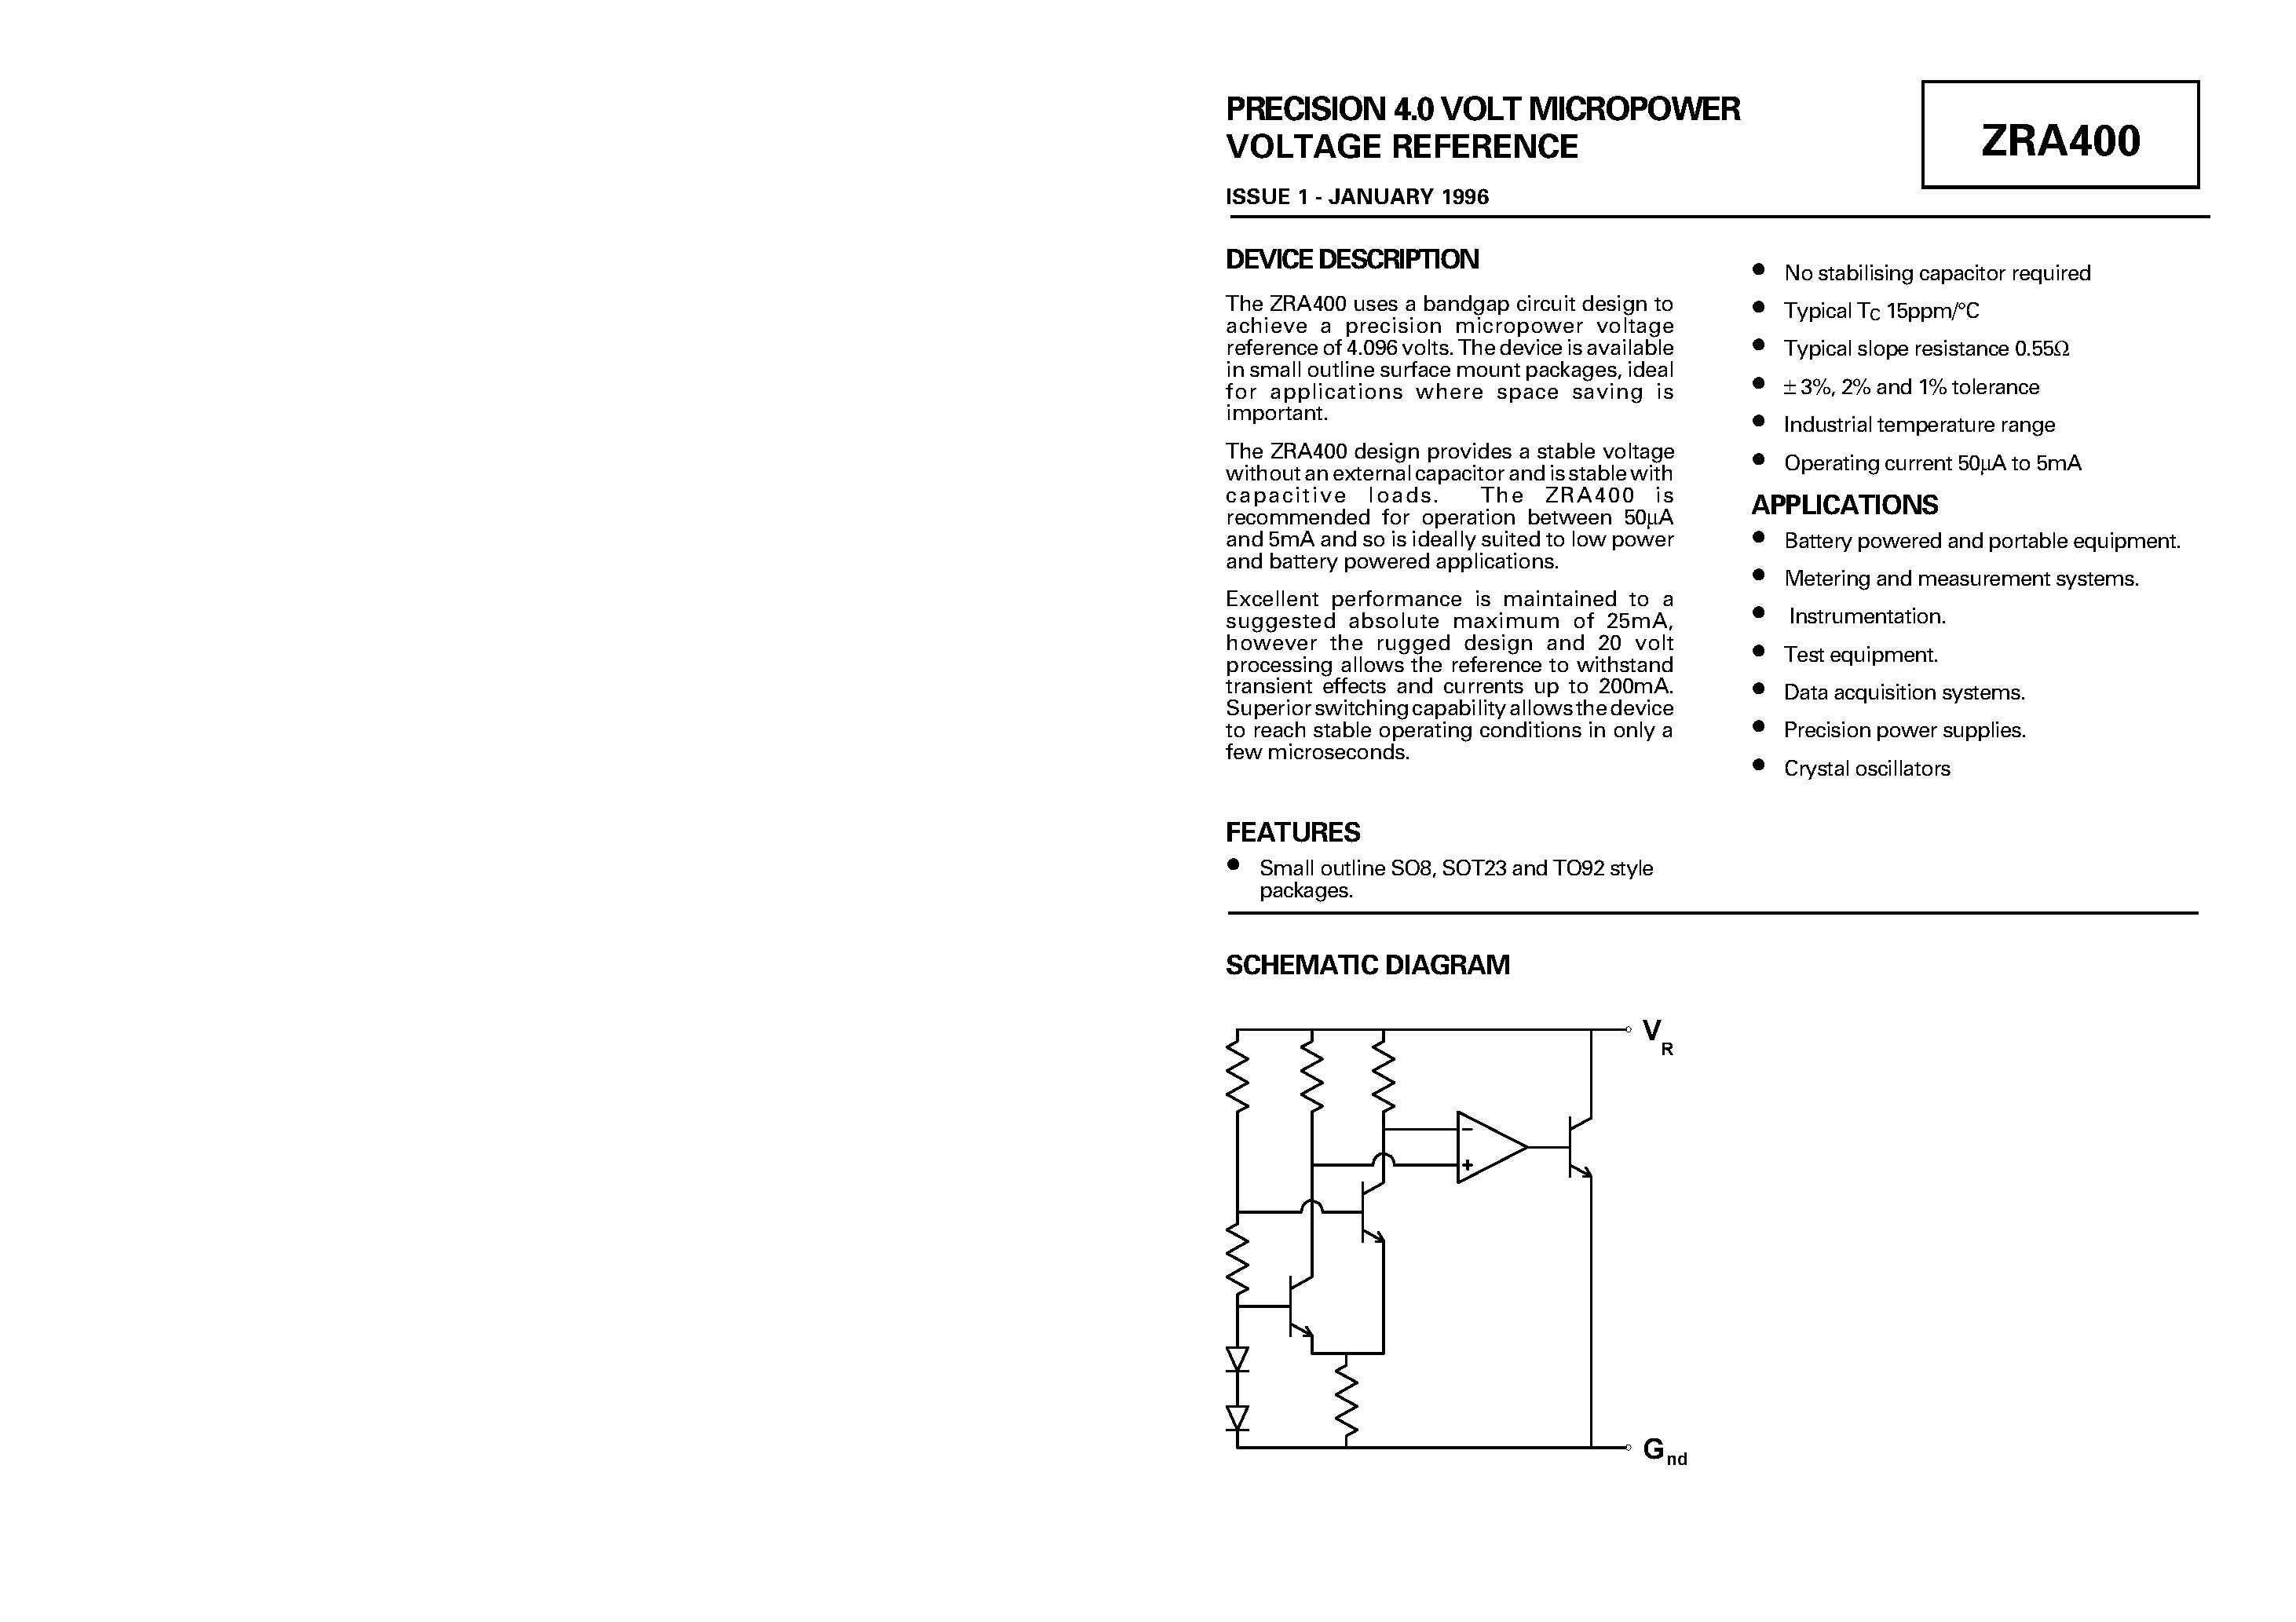 Datasheet ZRA400N803 - PRECISION 4.0 VOLT MICROPOWER page 1